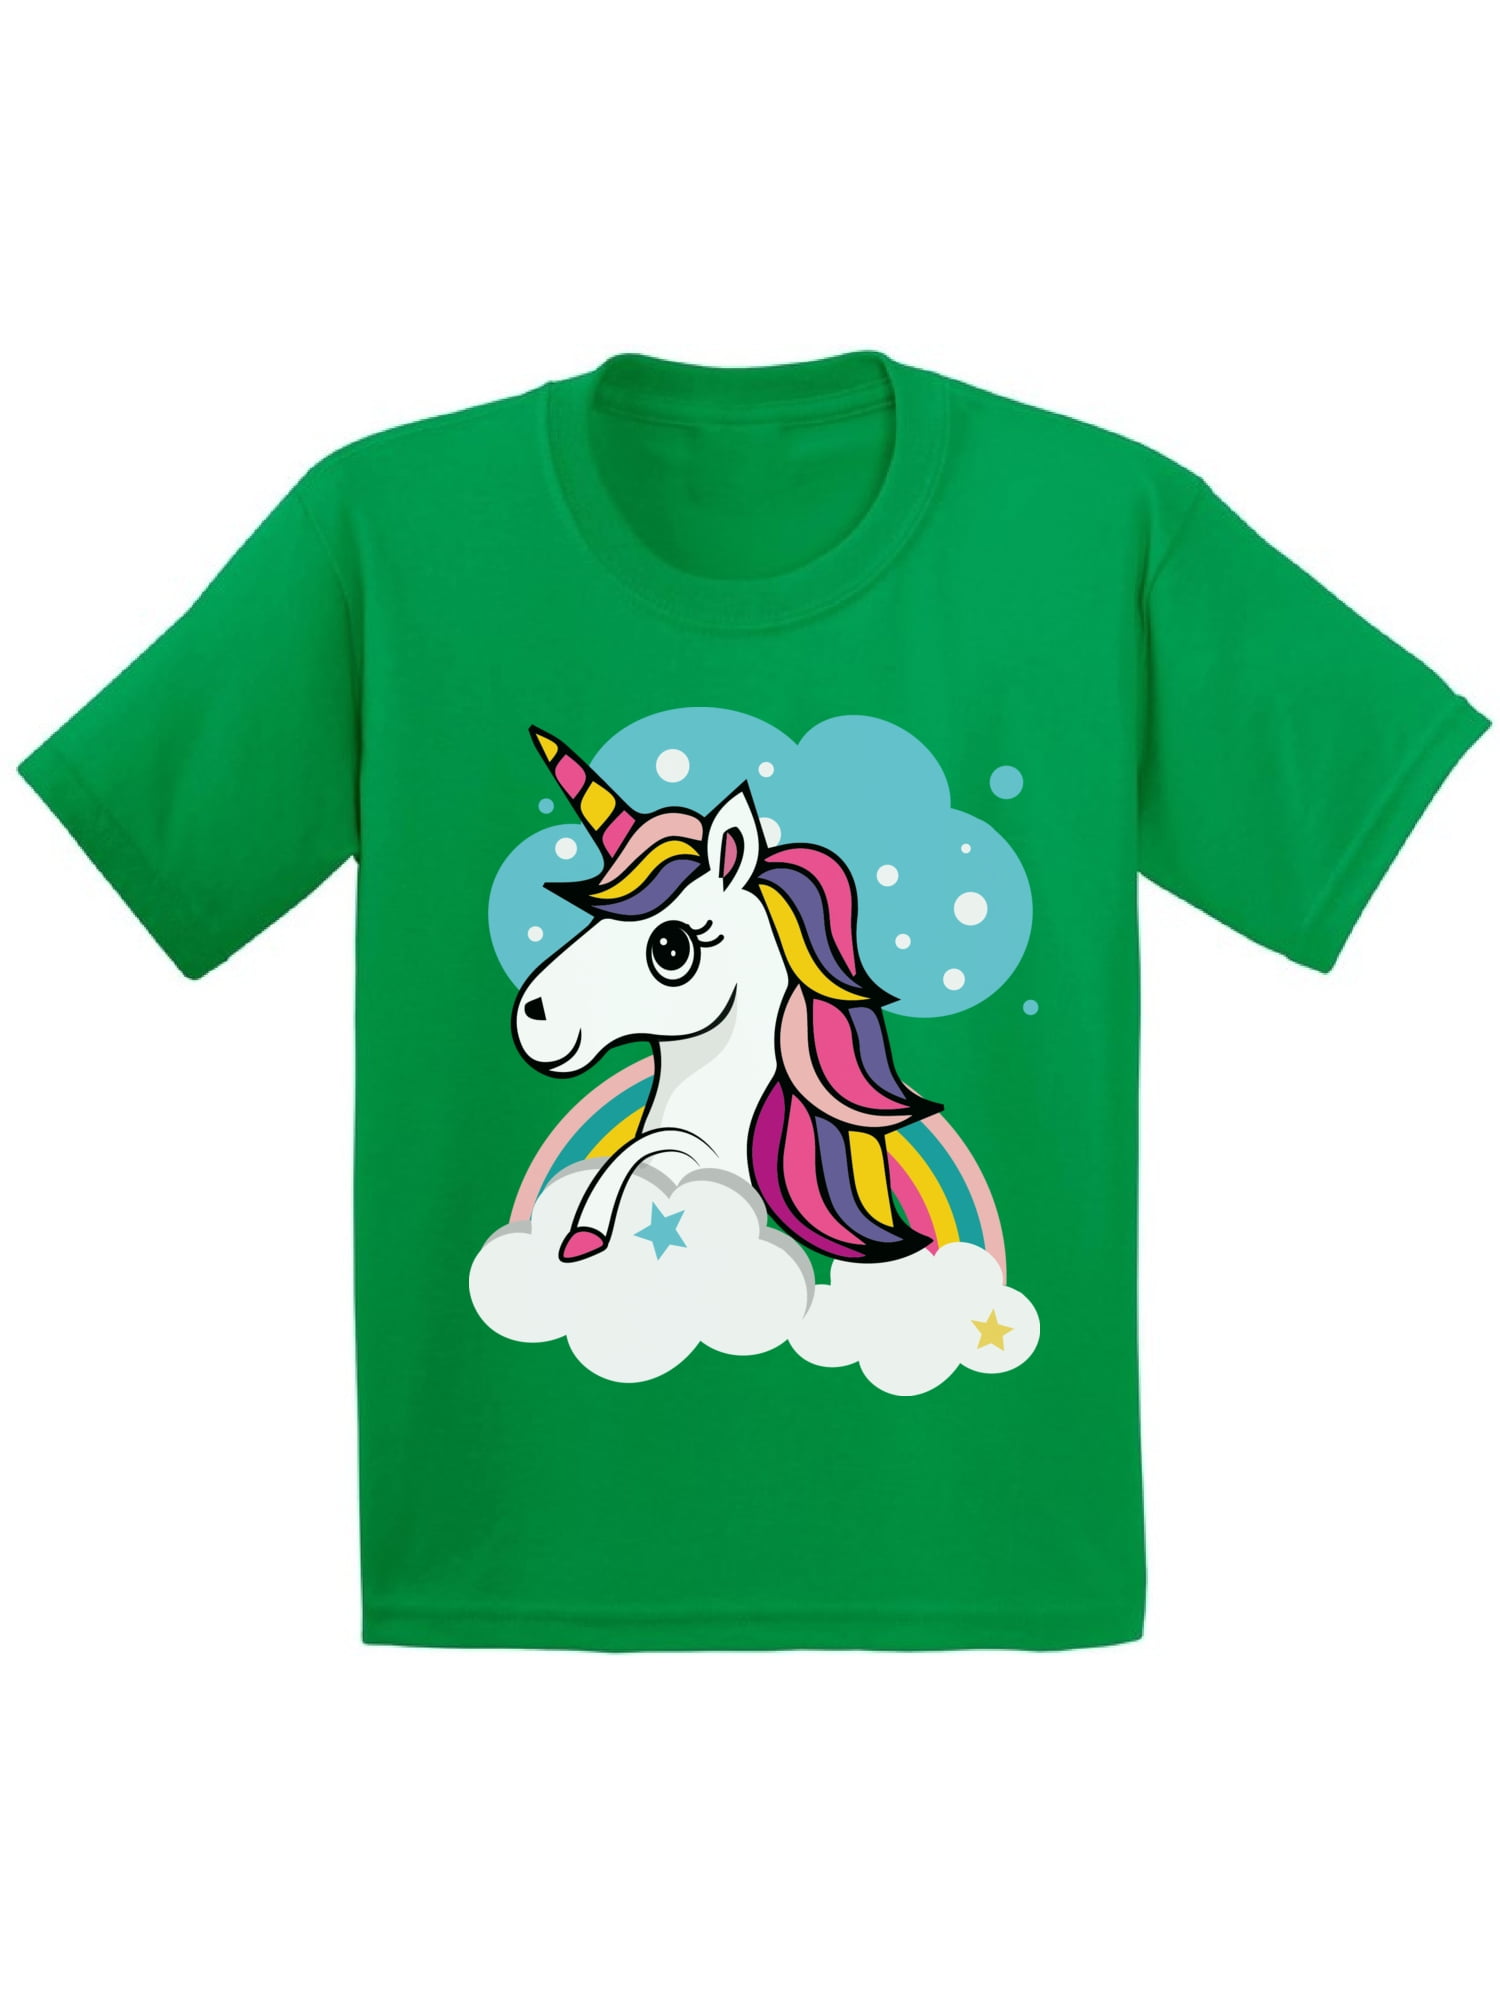 Awkward Styles Cute Unicorn Shirt for Youth Kids Boys Unicorn Gifts for ...